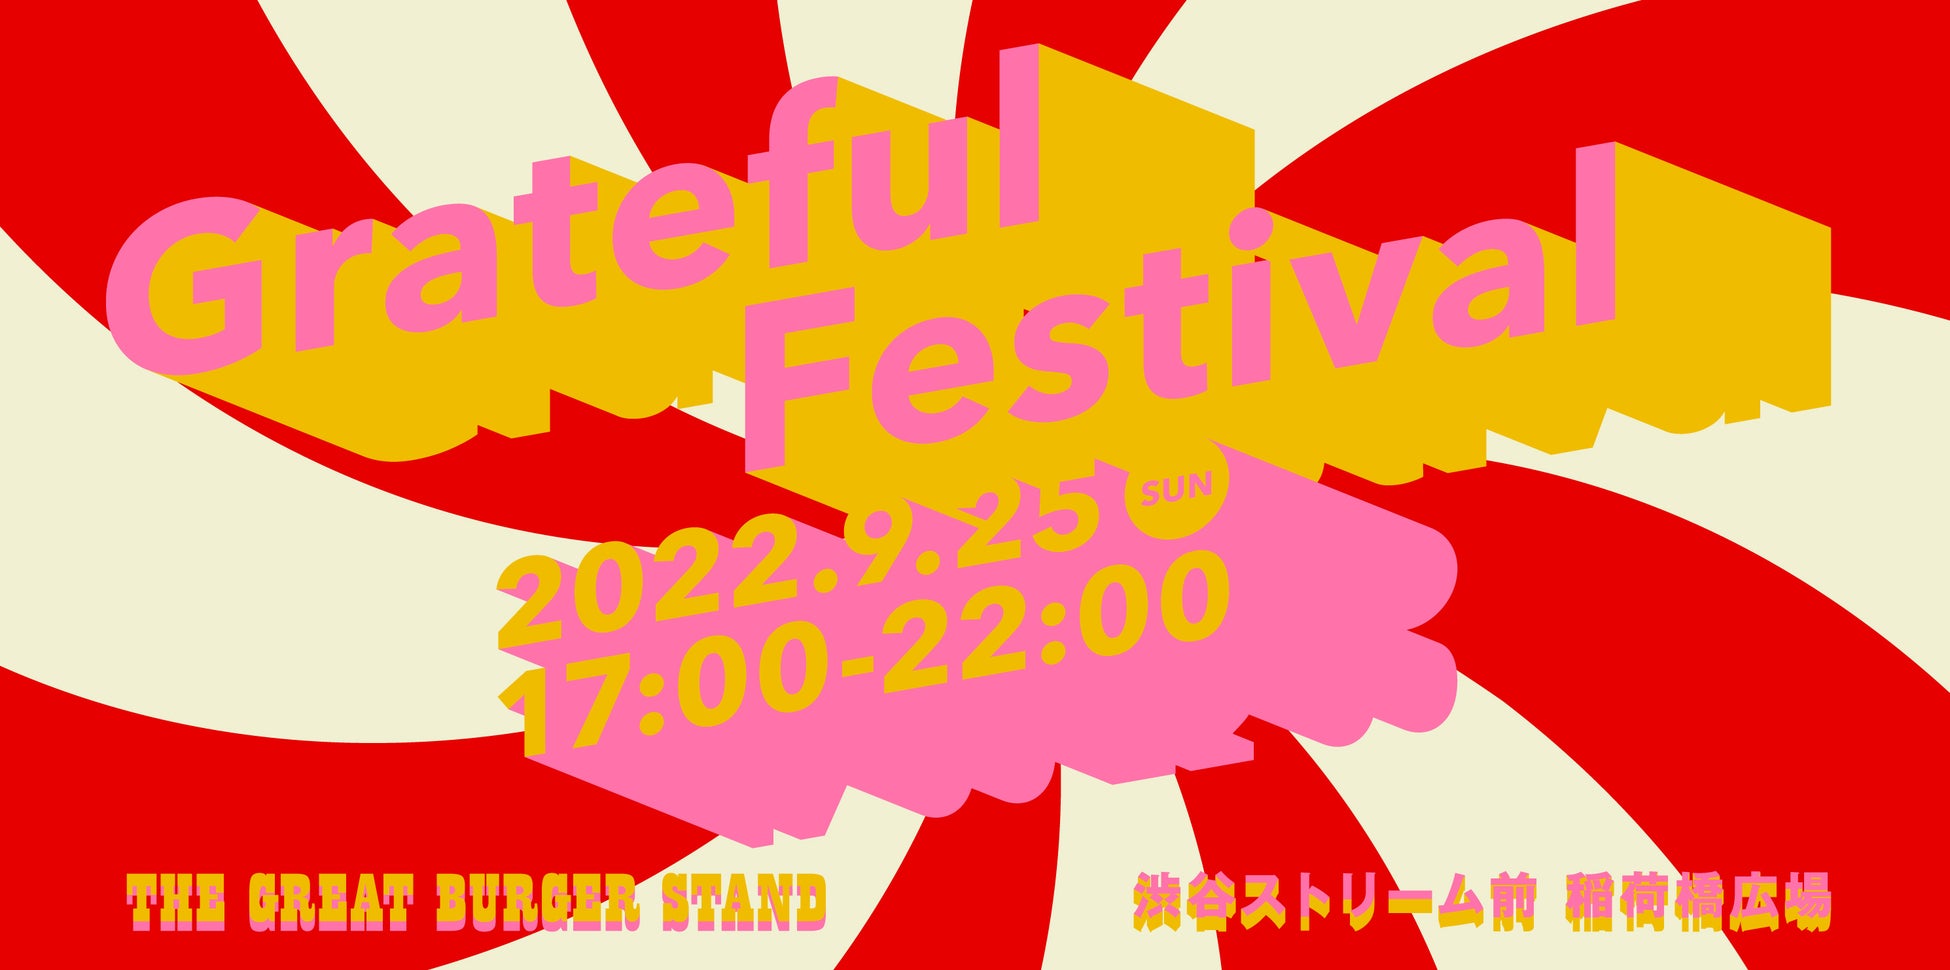 【THE GREAT BURGER主催】グルメと音楽が集結する一夜限りの祭典「Grateful Festival」9/25（日）17:00〜22:00 @渋谷ストリームで開催！